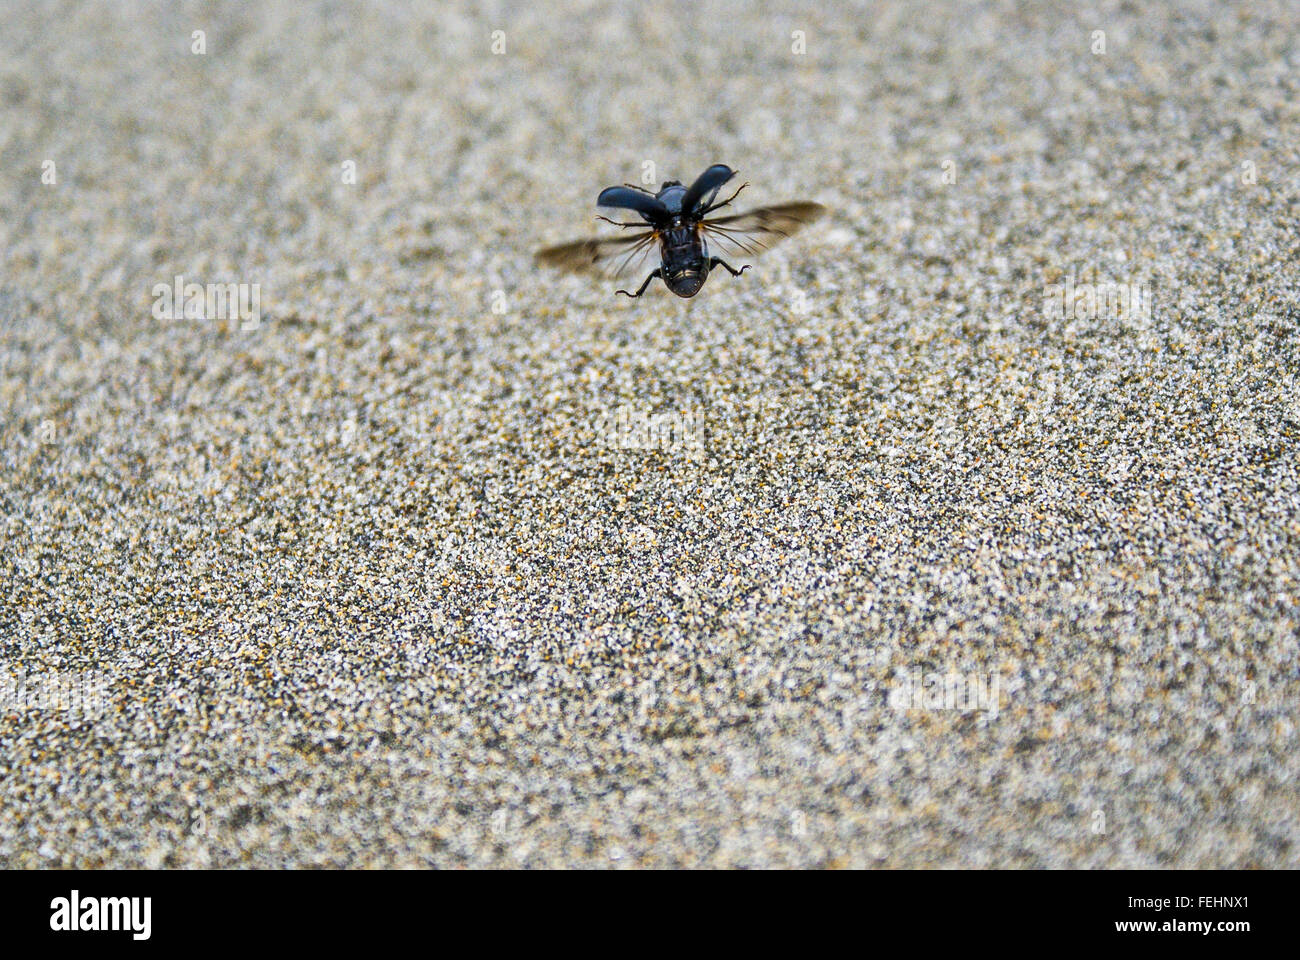 a-black-scarab-beetle-takes-flight-over-sand-FEHNX1.jpg